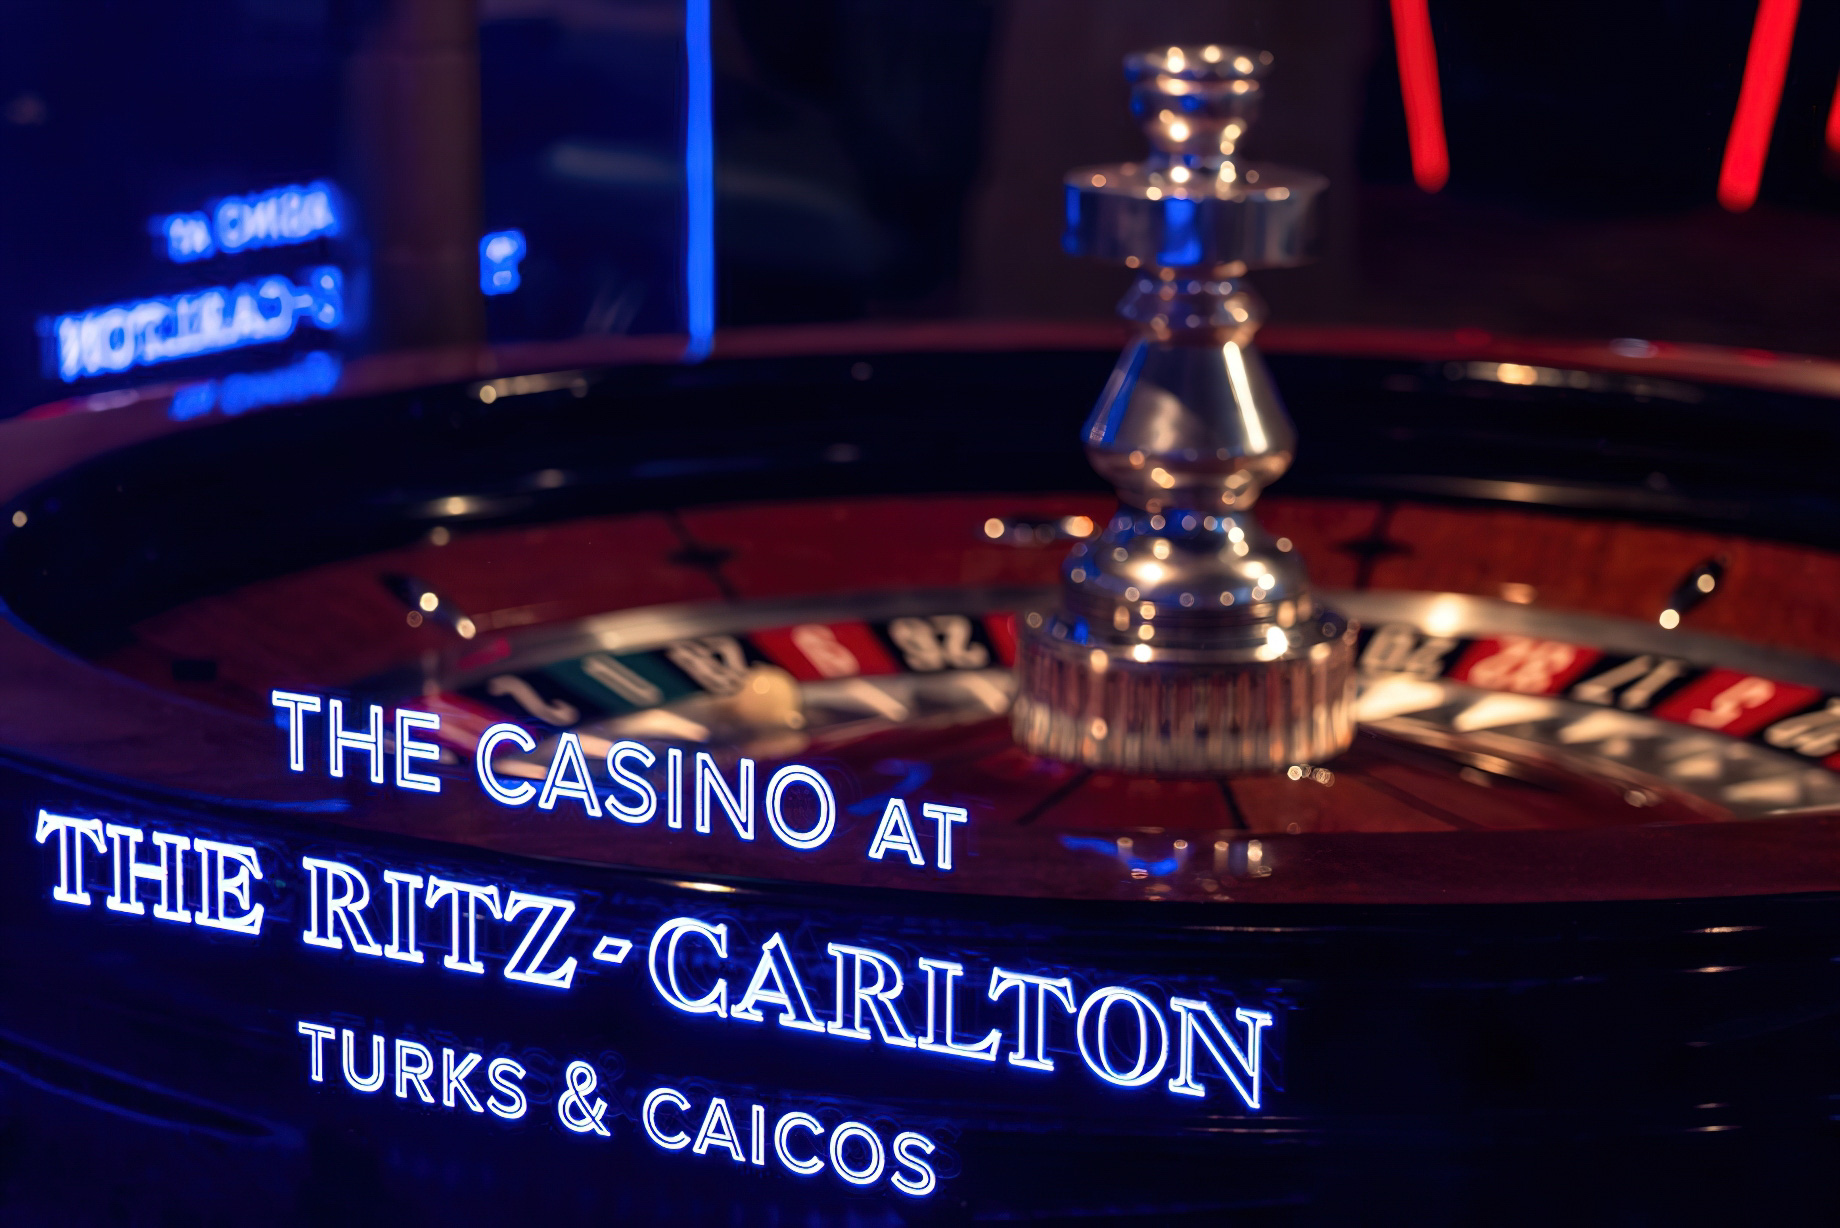 The Ritz-Carlton, Turks & Caicos Resort - Providenciales, Turks and Caicos Islands - Casino